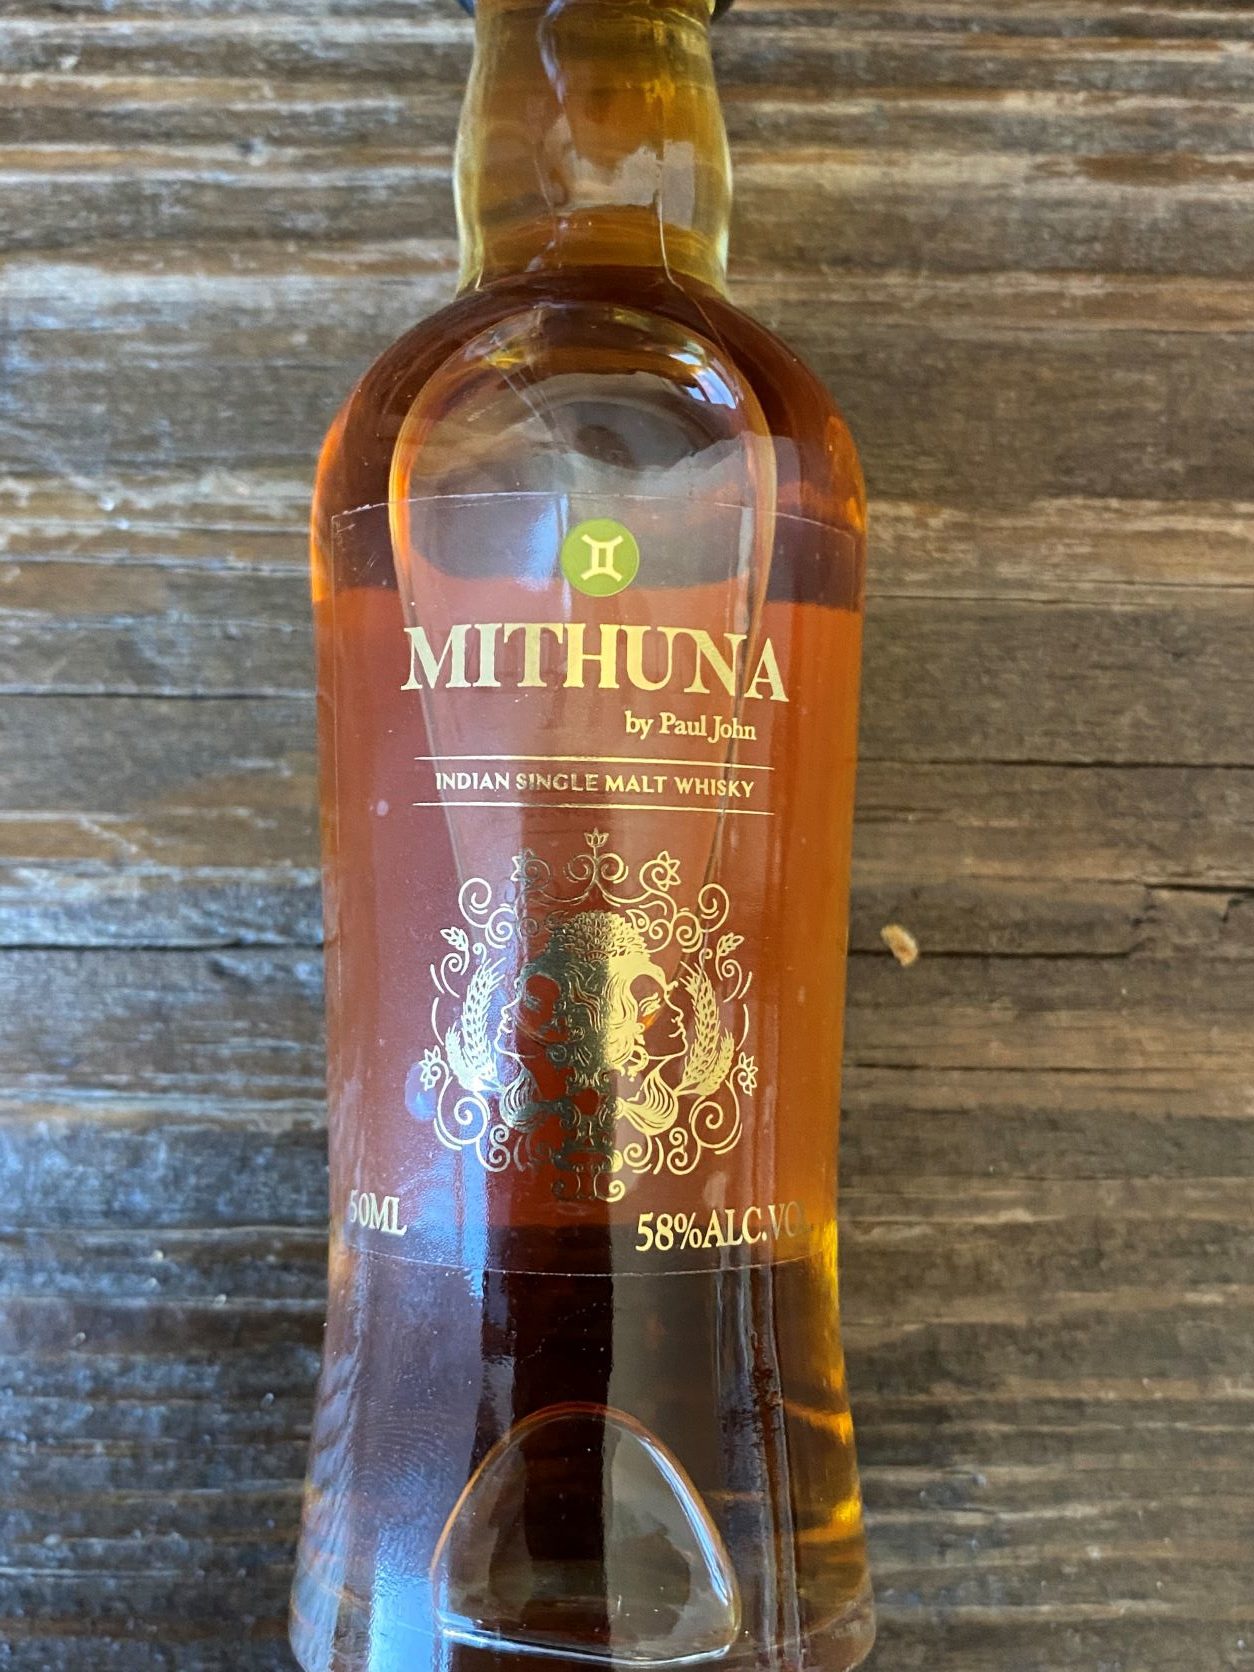 Paul John “Mithuna” Single Malt Whisky